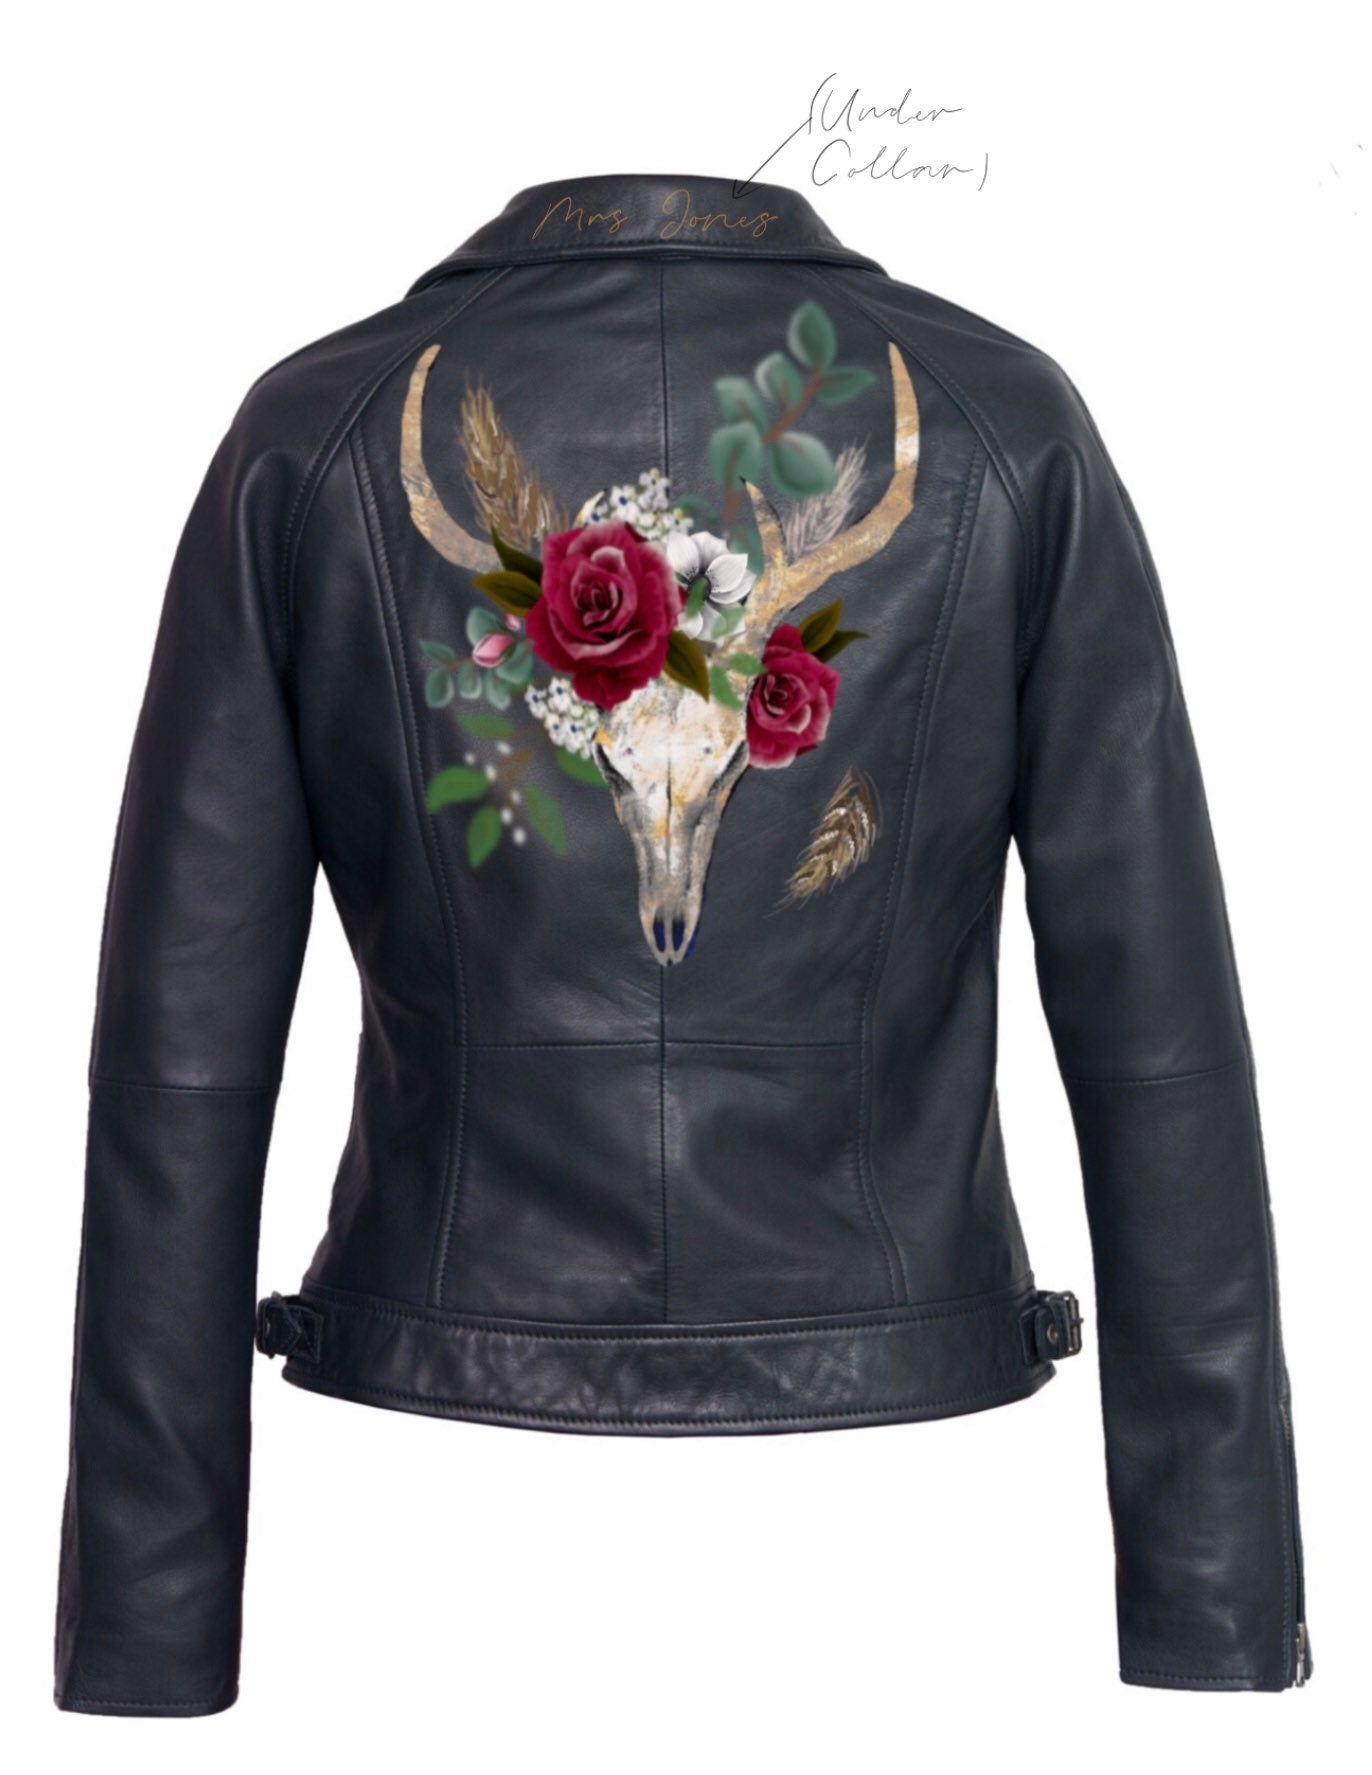 Painted Leather Jacket, Personalised Bride Jacket, Cow Skull Jacket